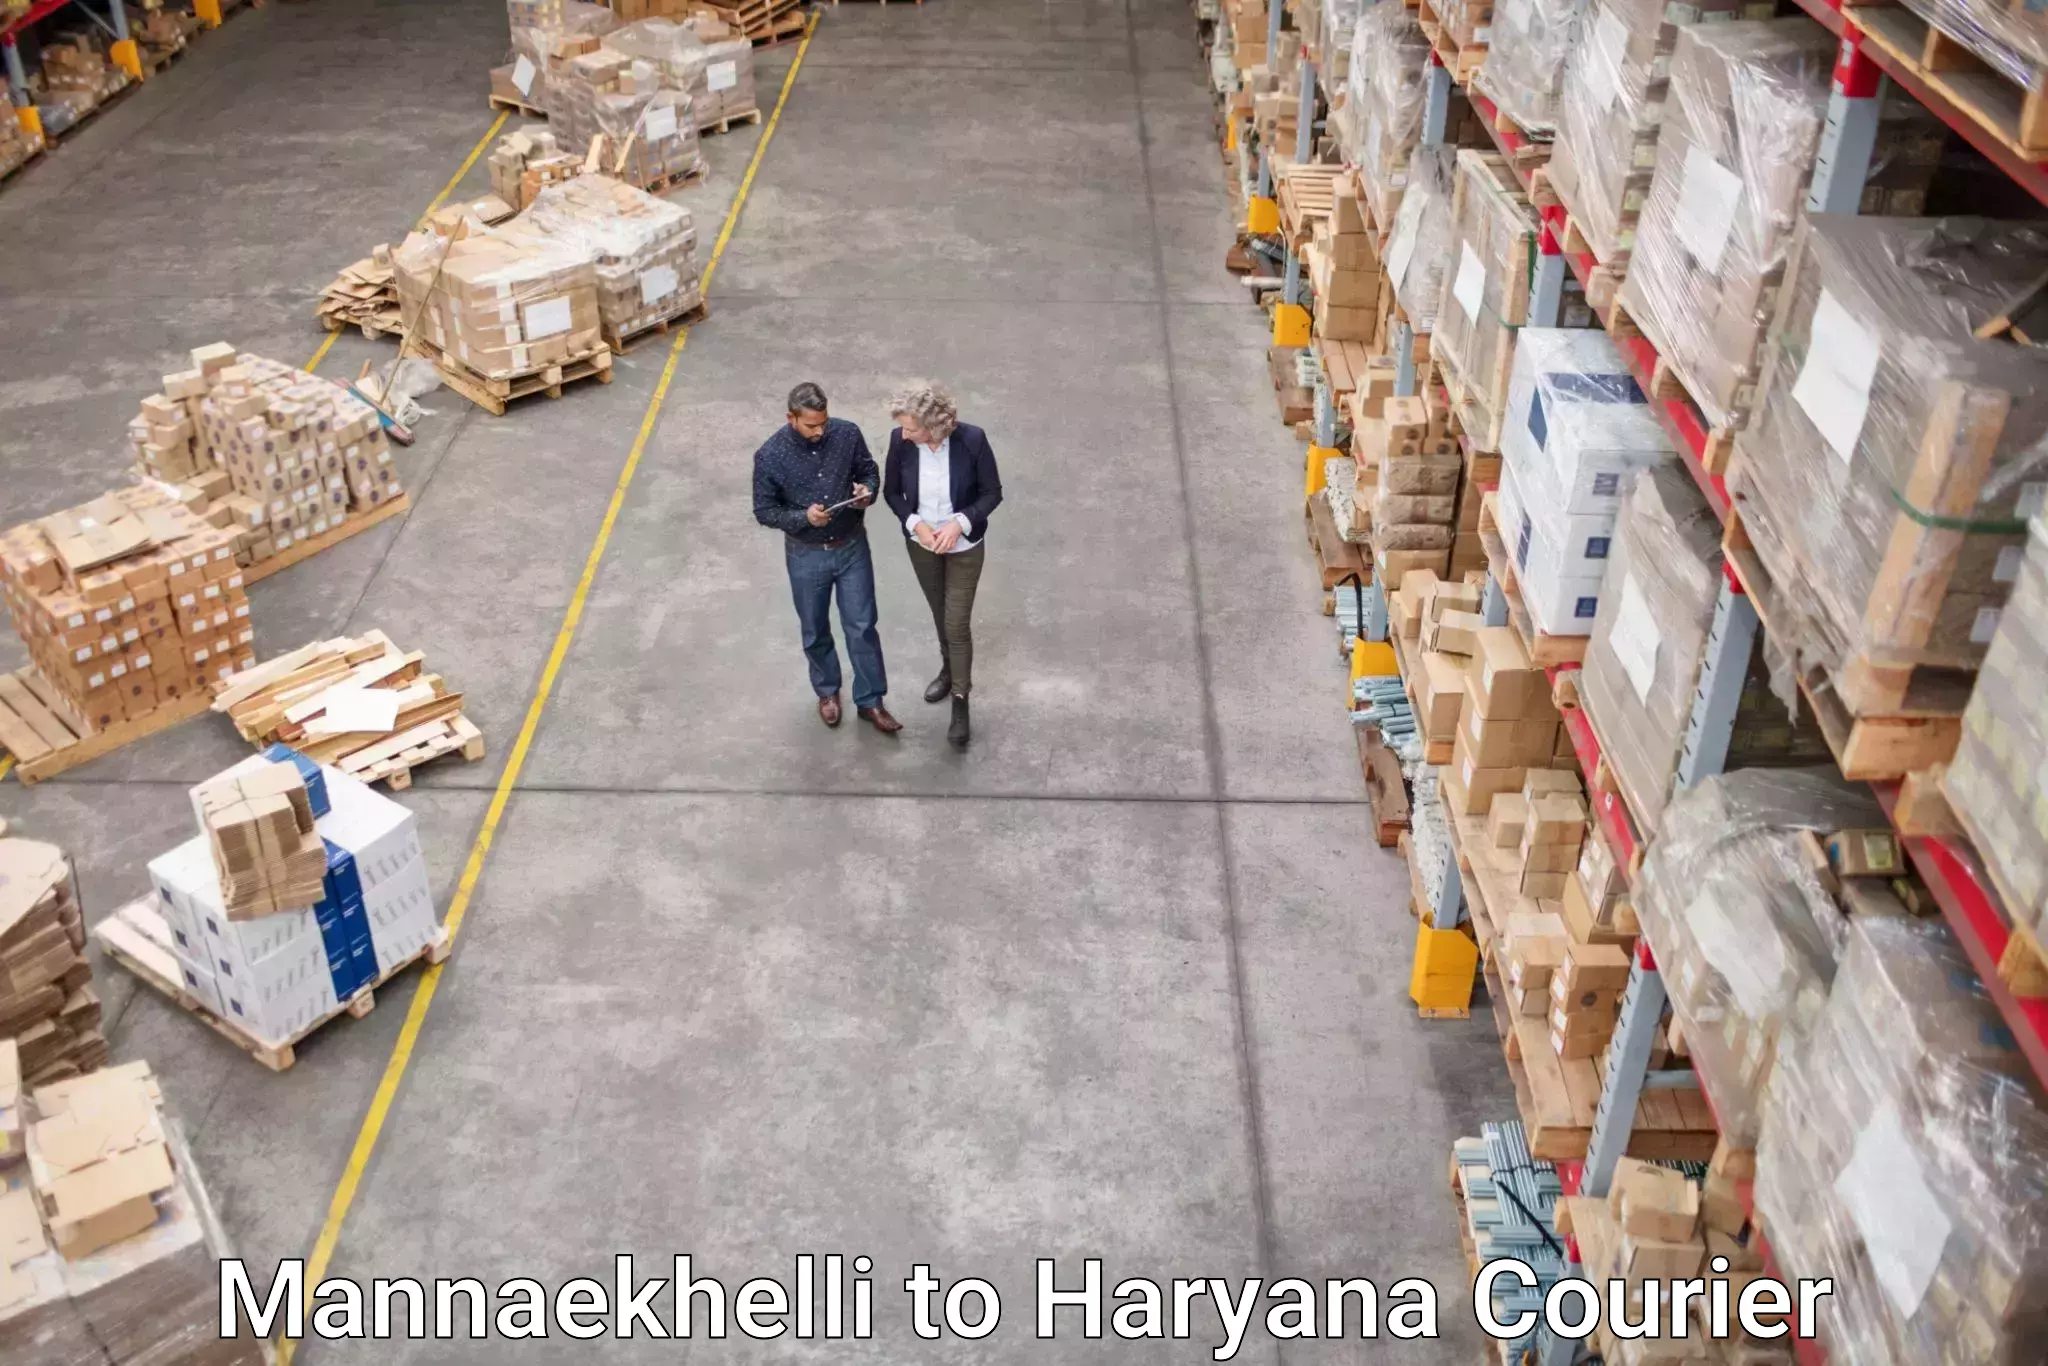 Business shipping needs Mannaekhelli to Pinjore